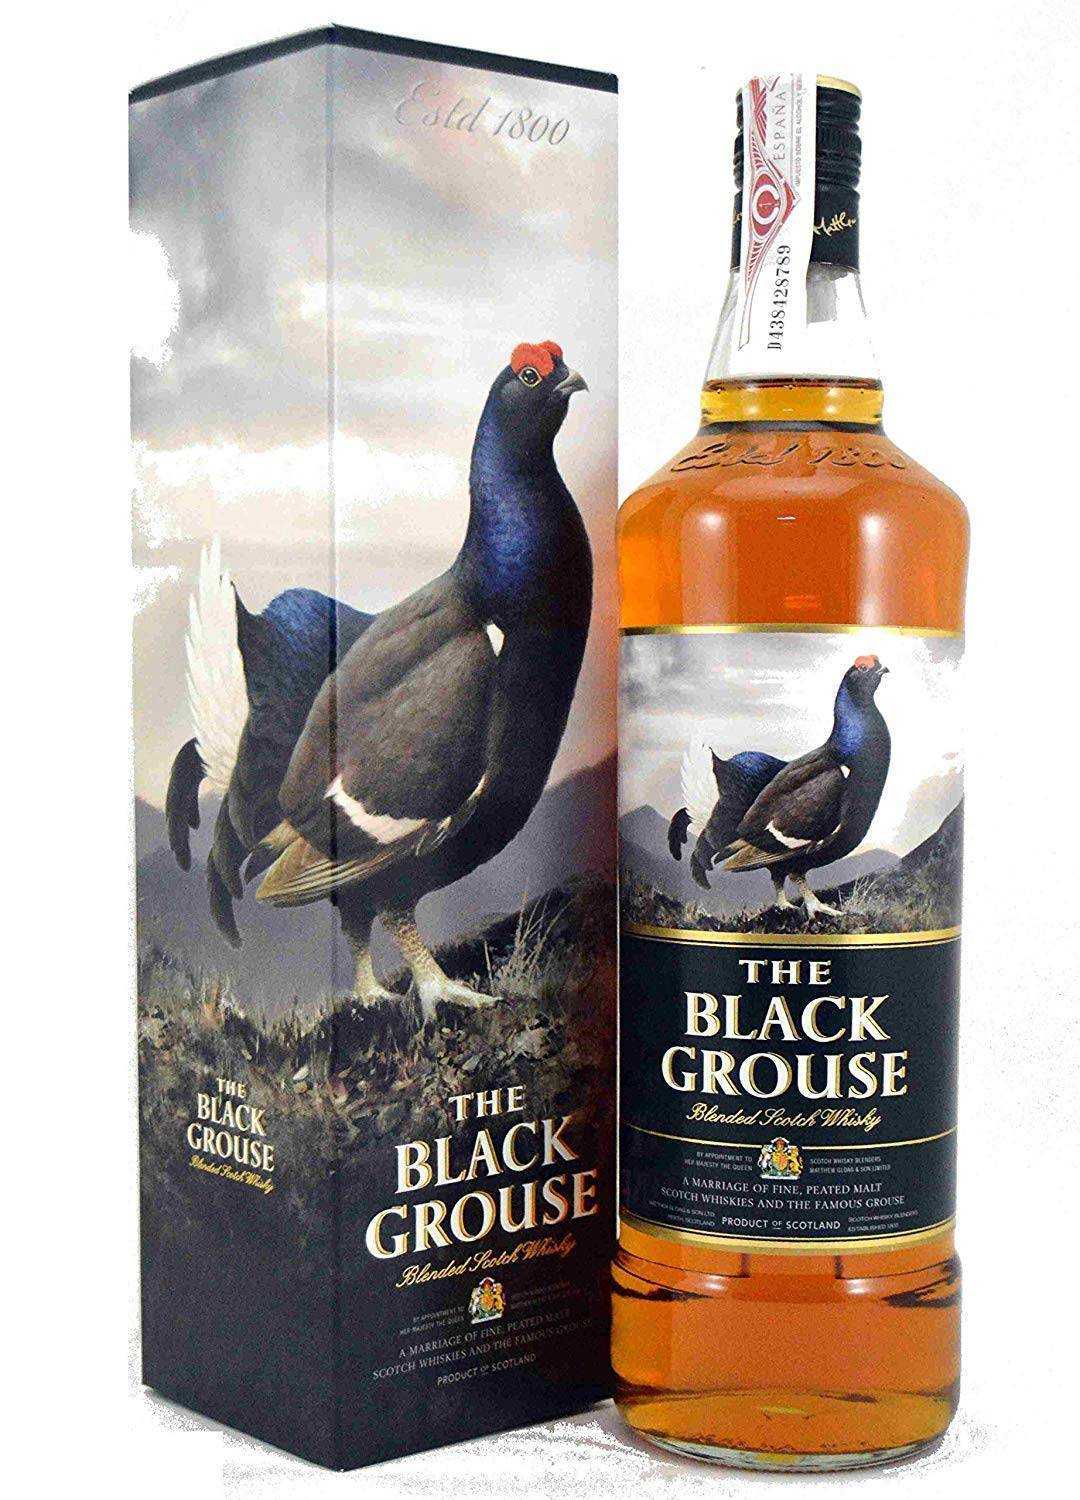 Виски "фэймос граус" (famous grouse): виды, описание, отзывы :: syl.ru